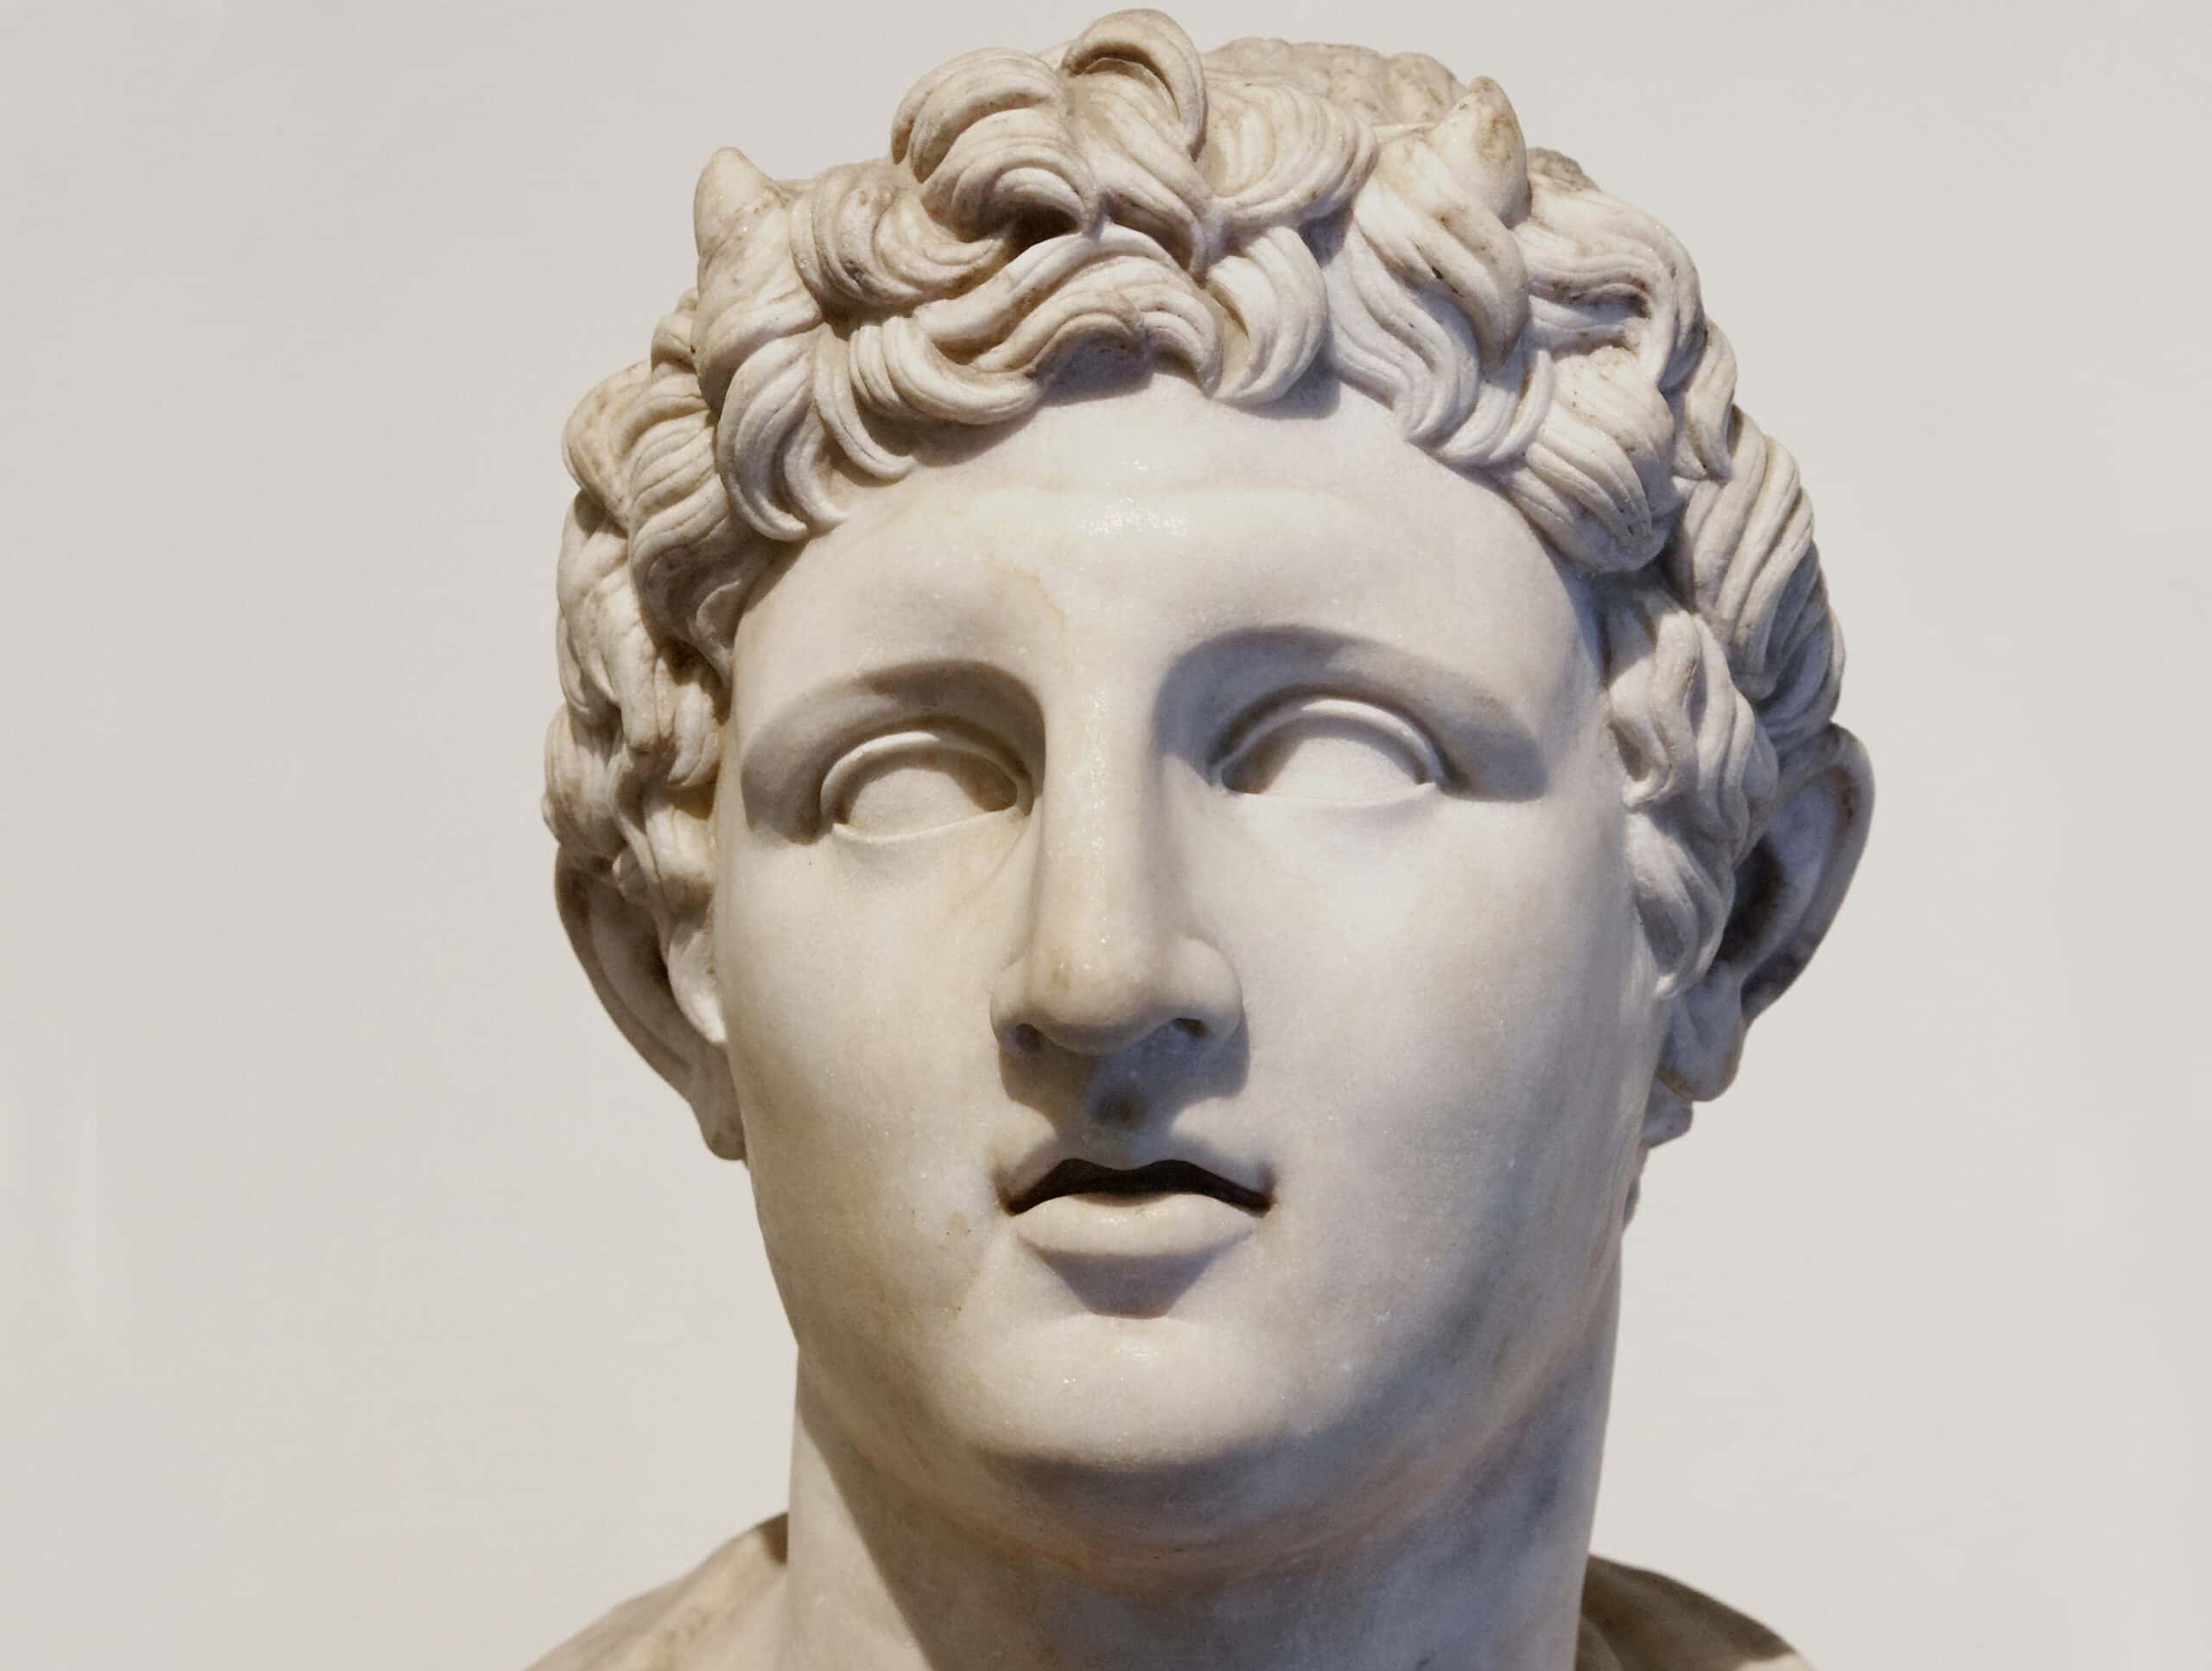 Ptolemy I Soter I 367 - 283 BC Greek Macedonian general under